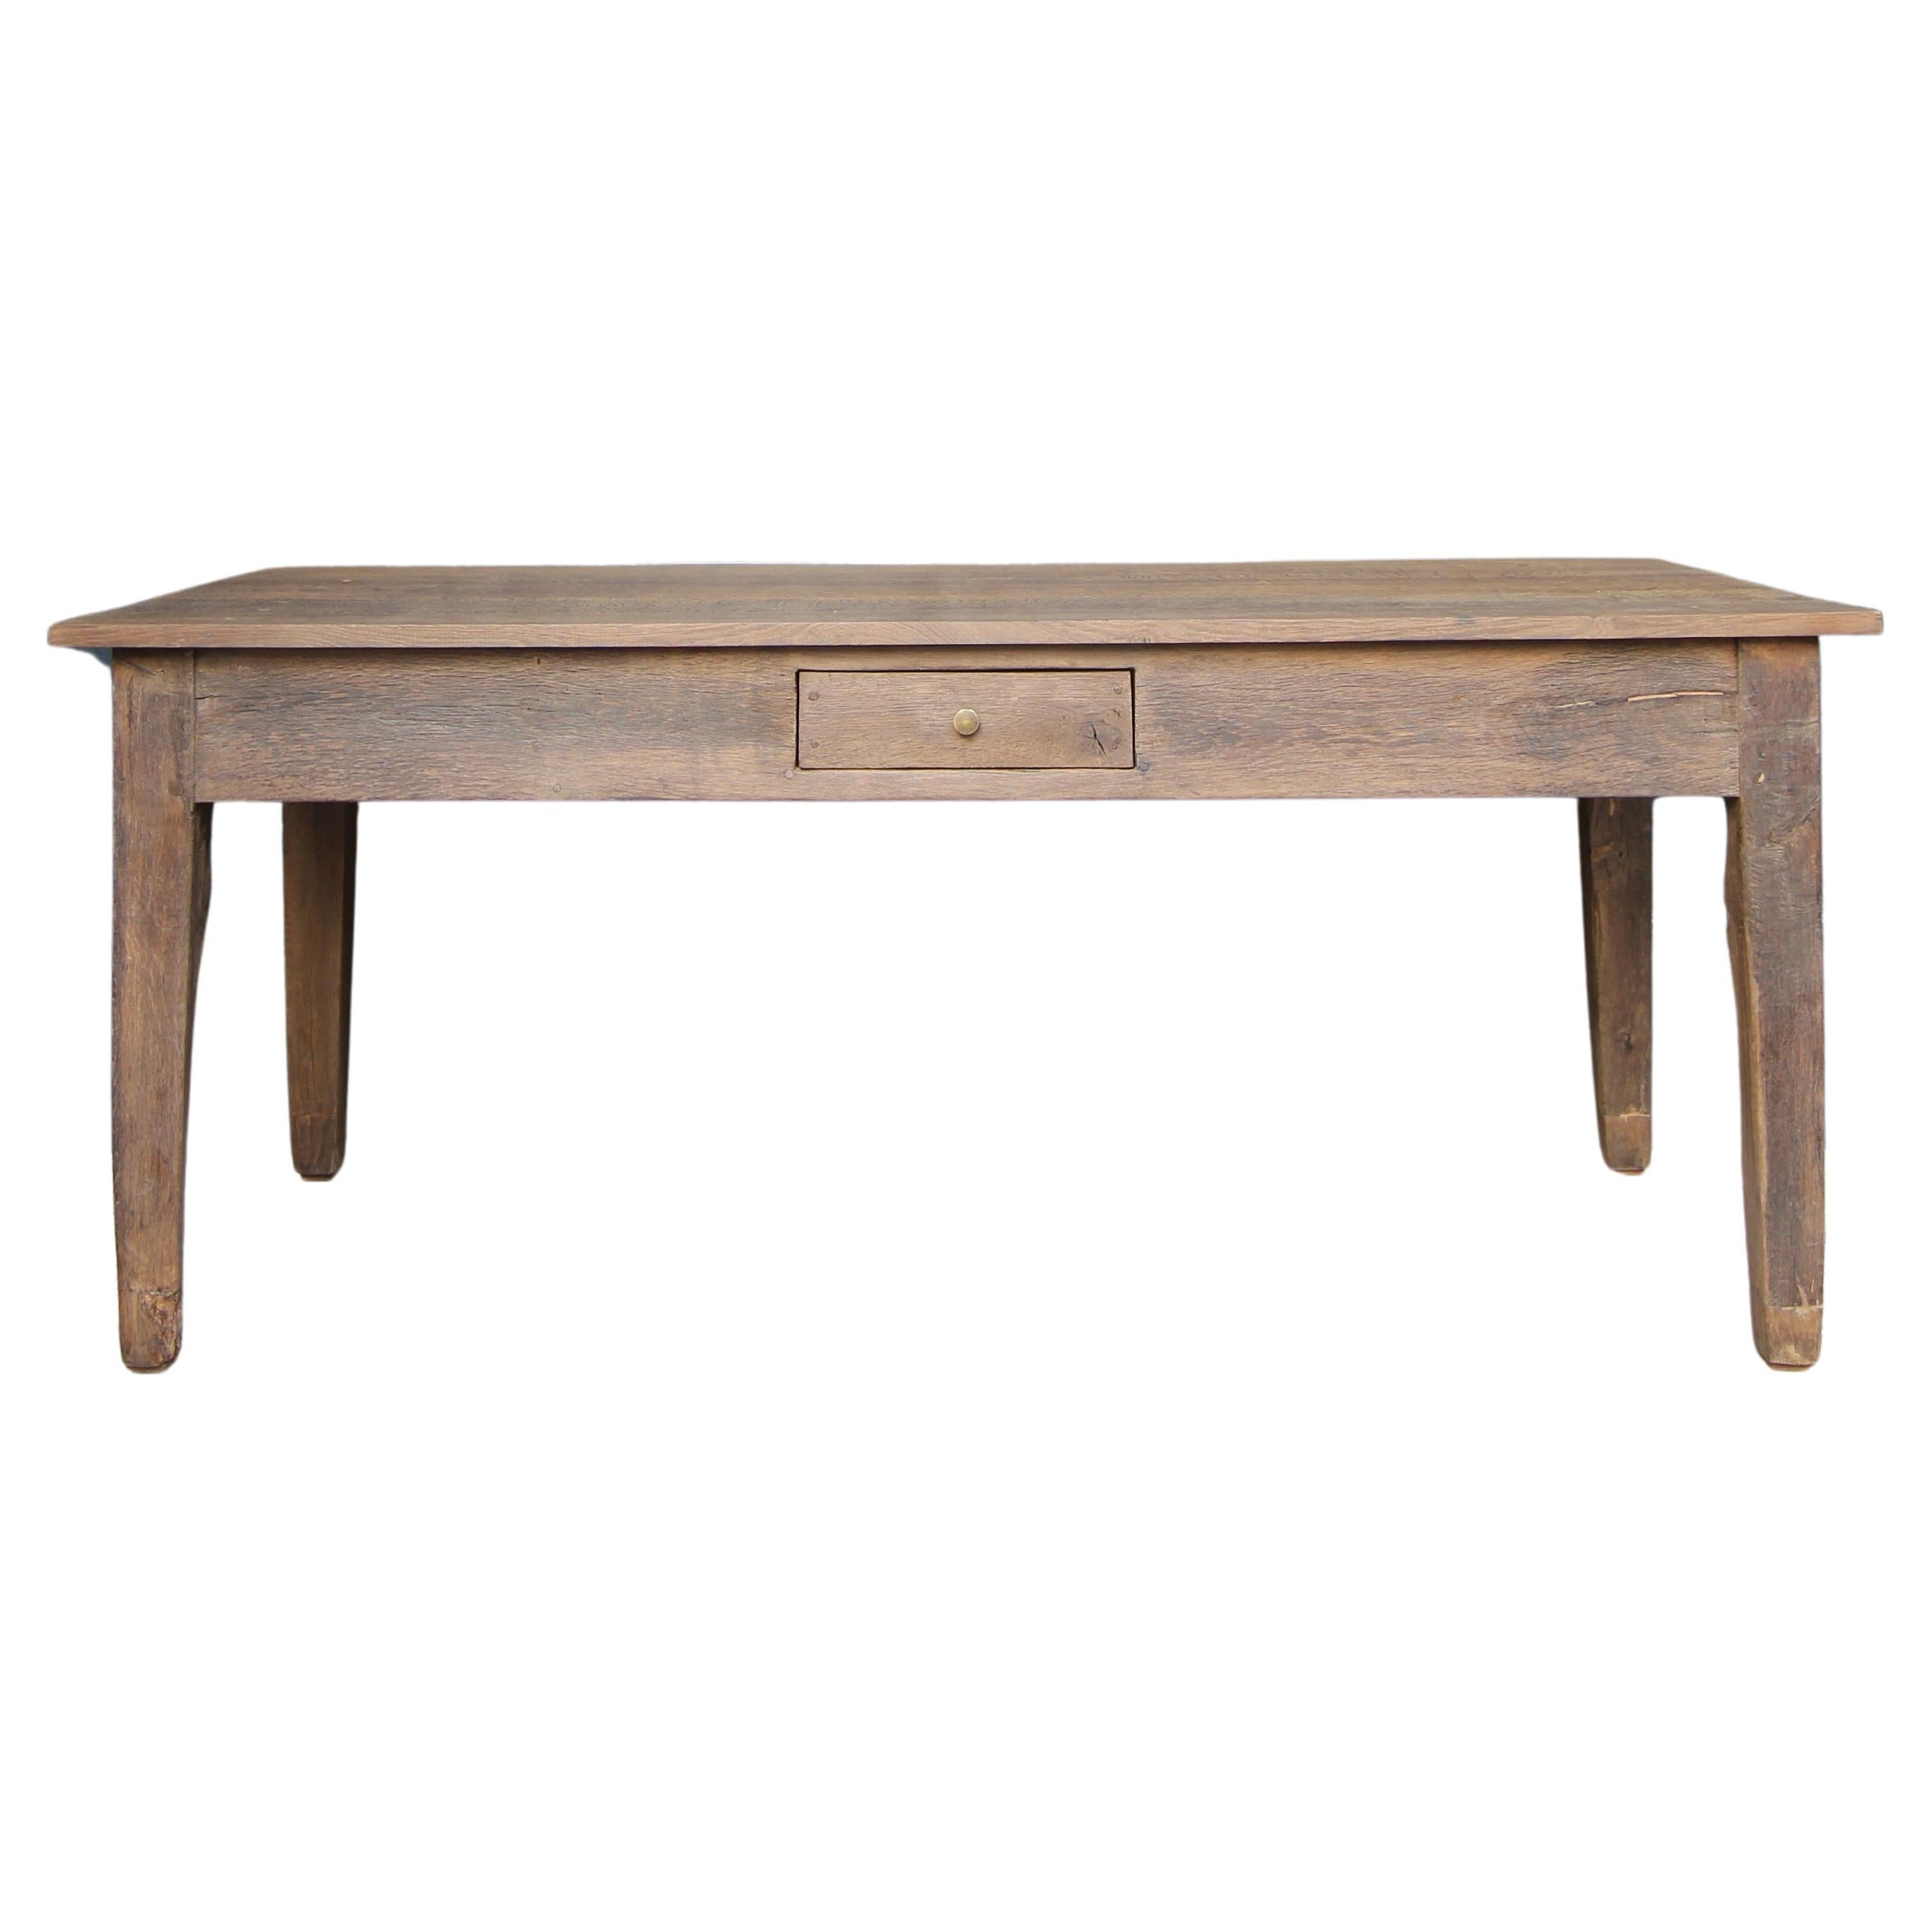 19th Century Rustic Rectangular Oak Table For Sale